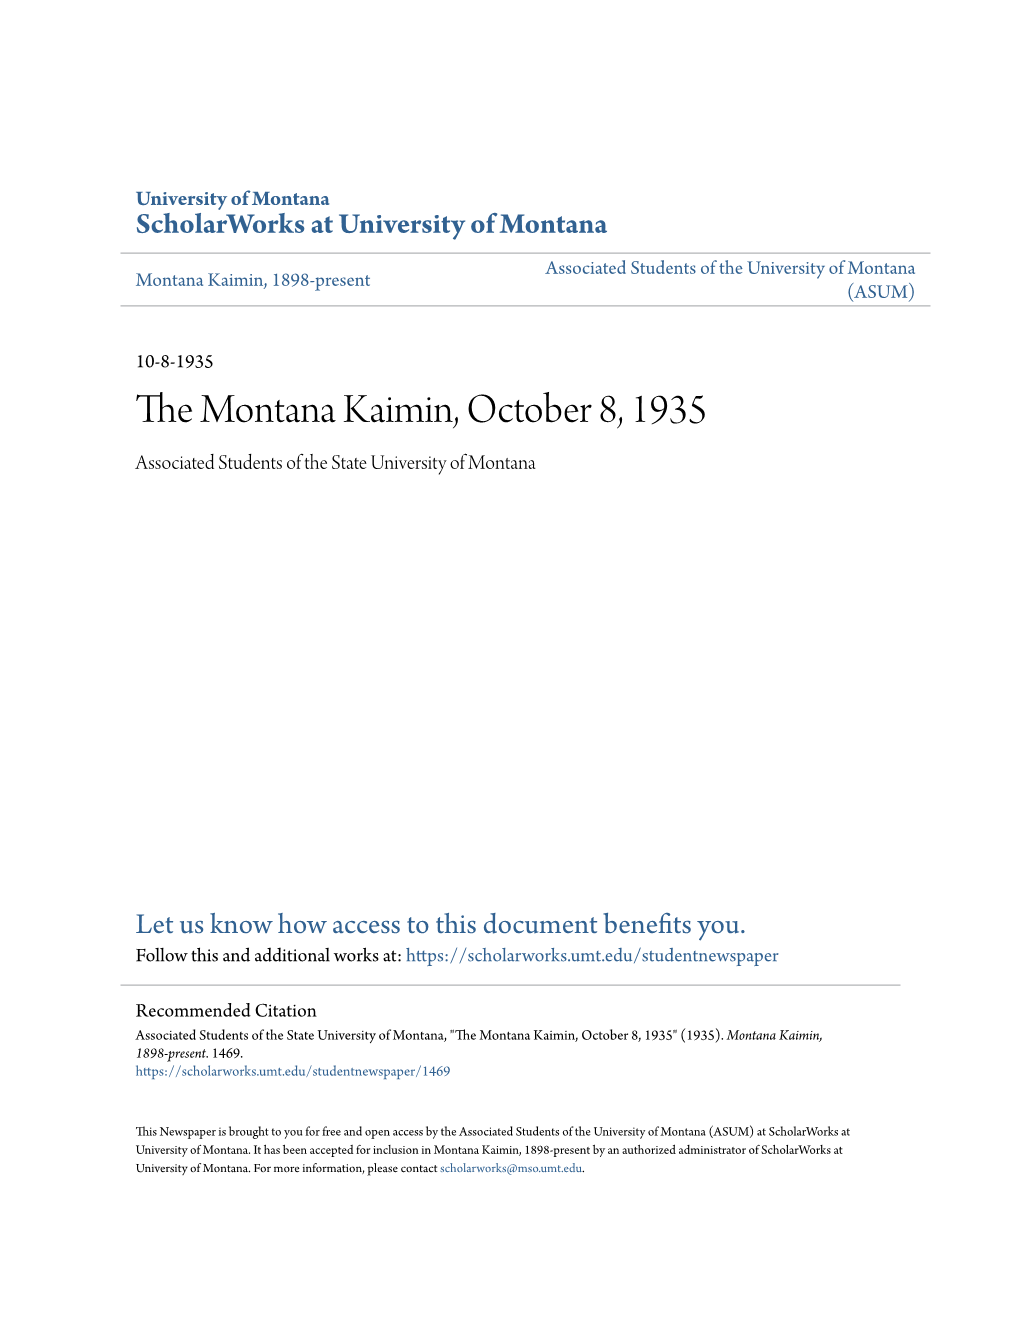 The Montana Kaimin, October 8, 1935